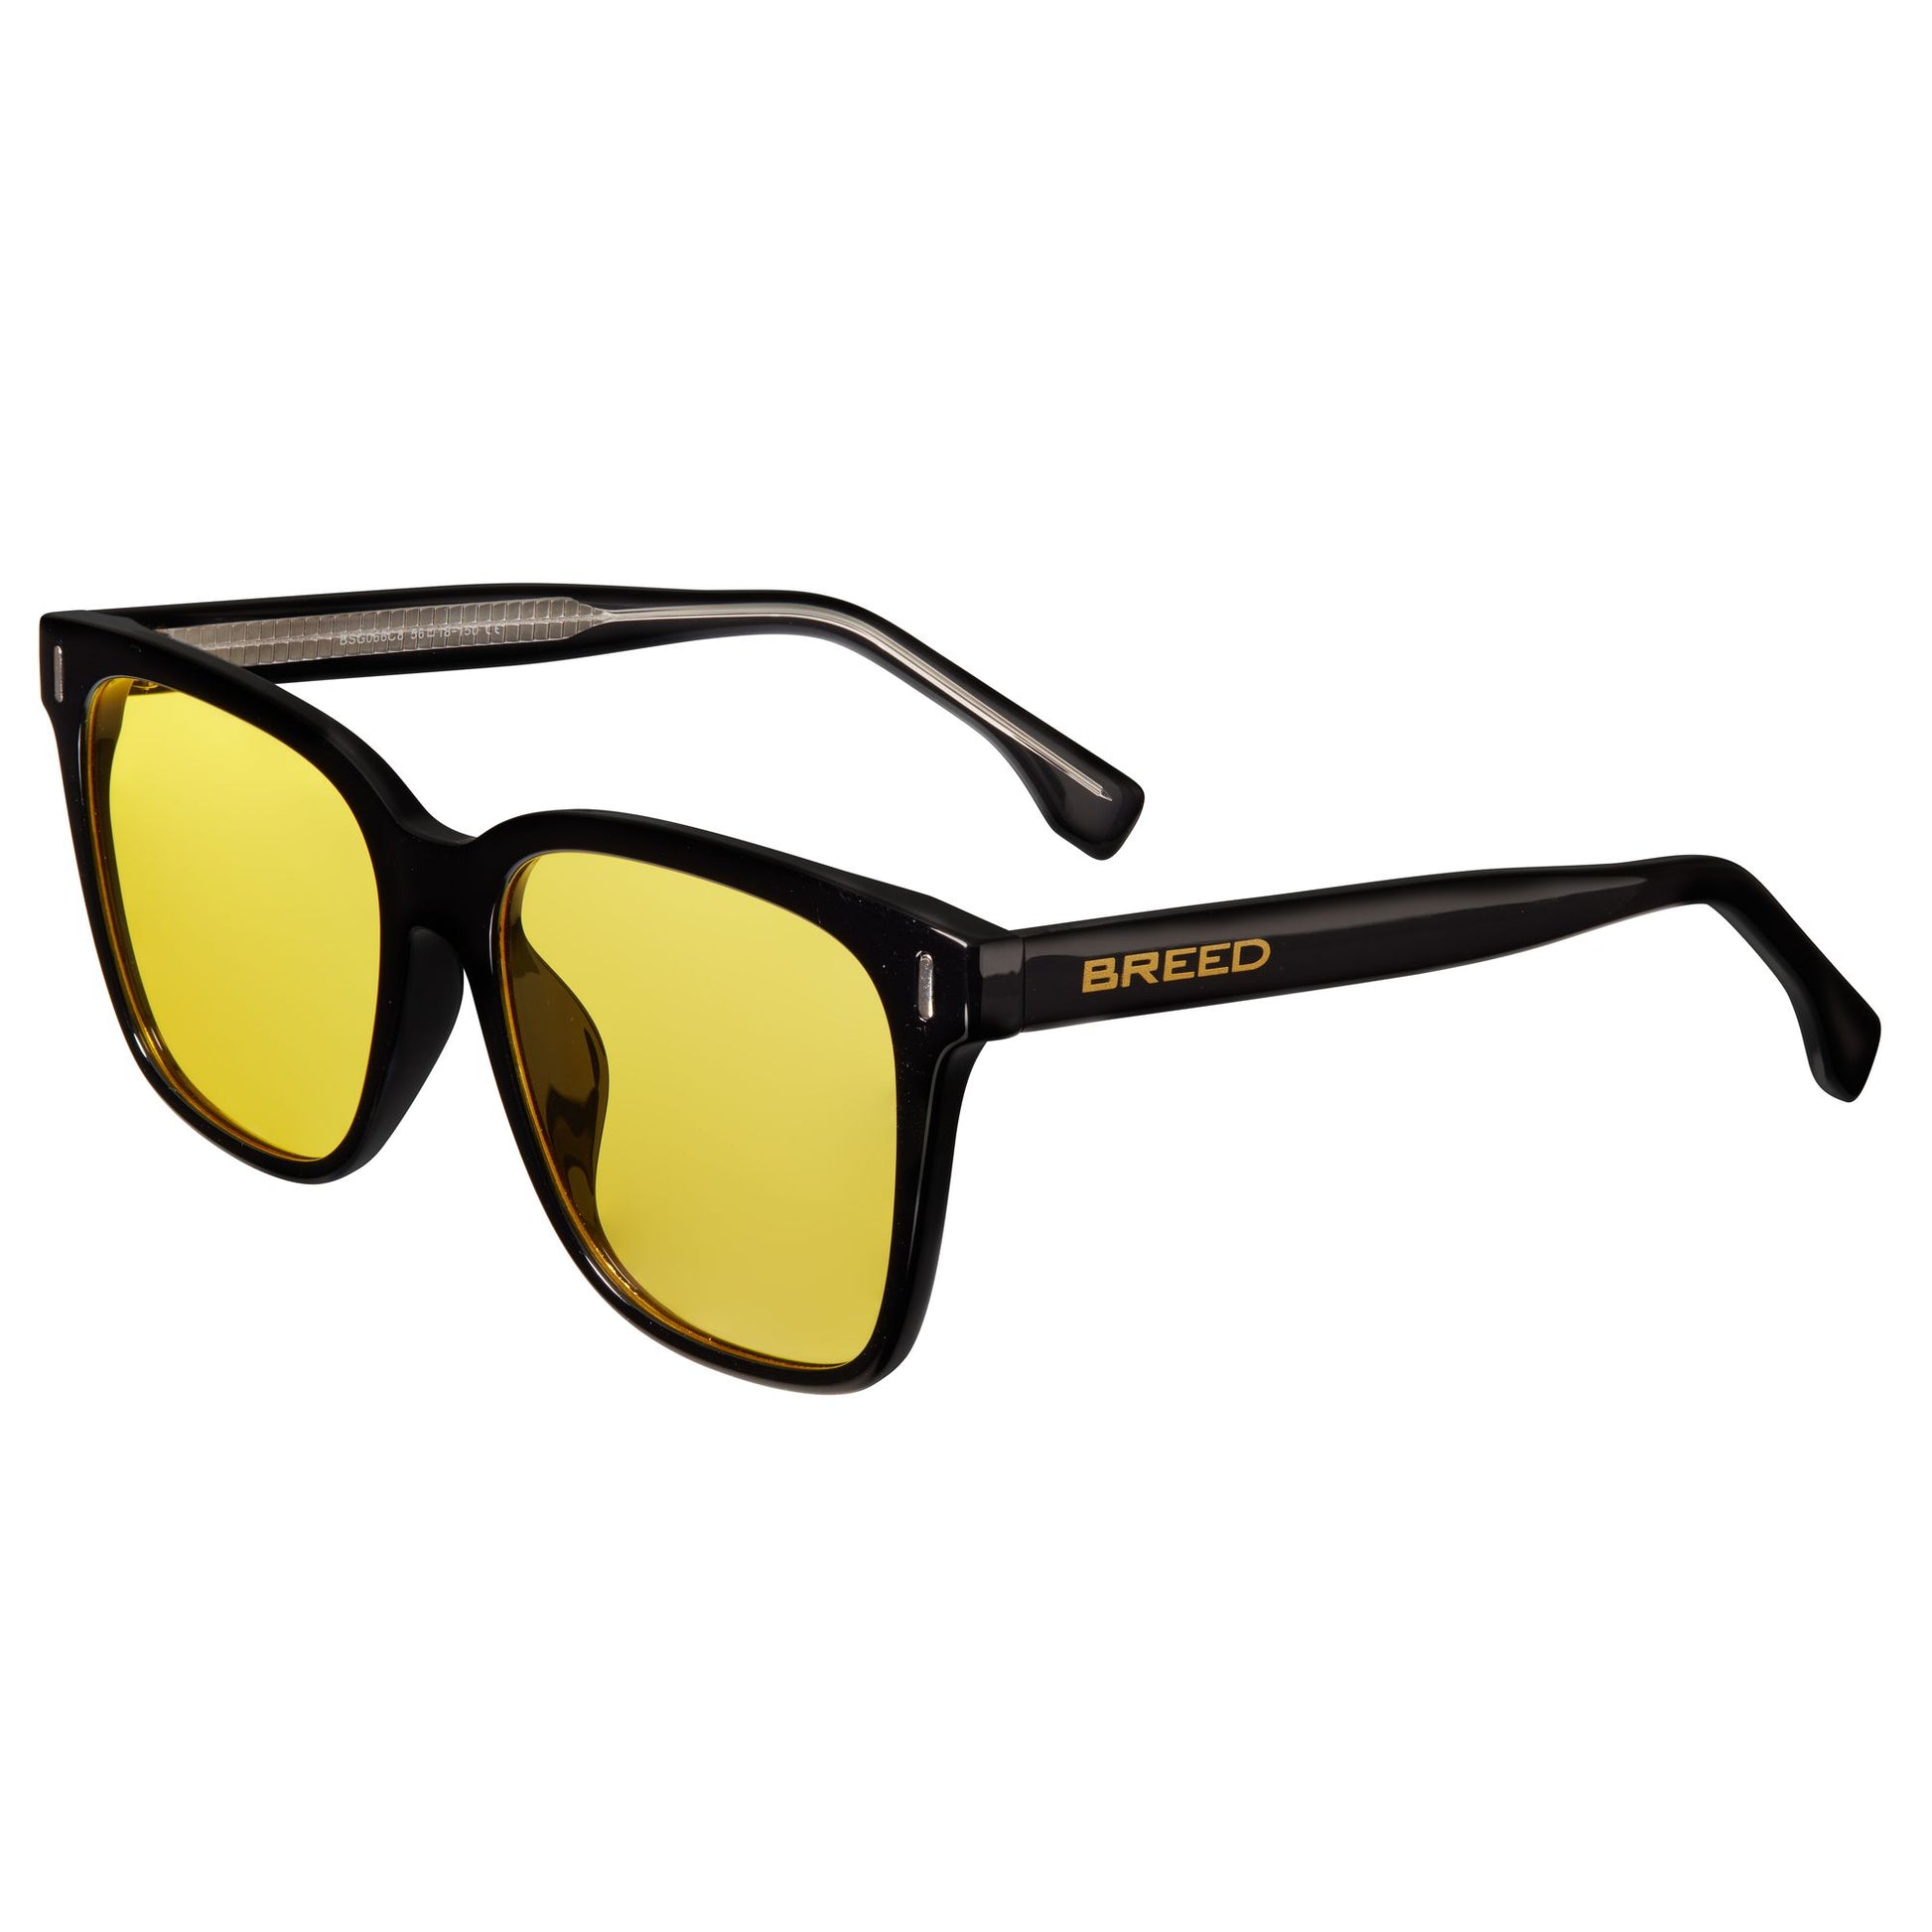 Breed Linux Polarized Sunglasses - Black/Yellow - BSG066C8